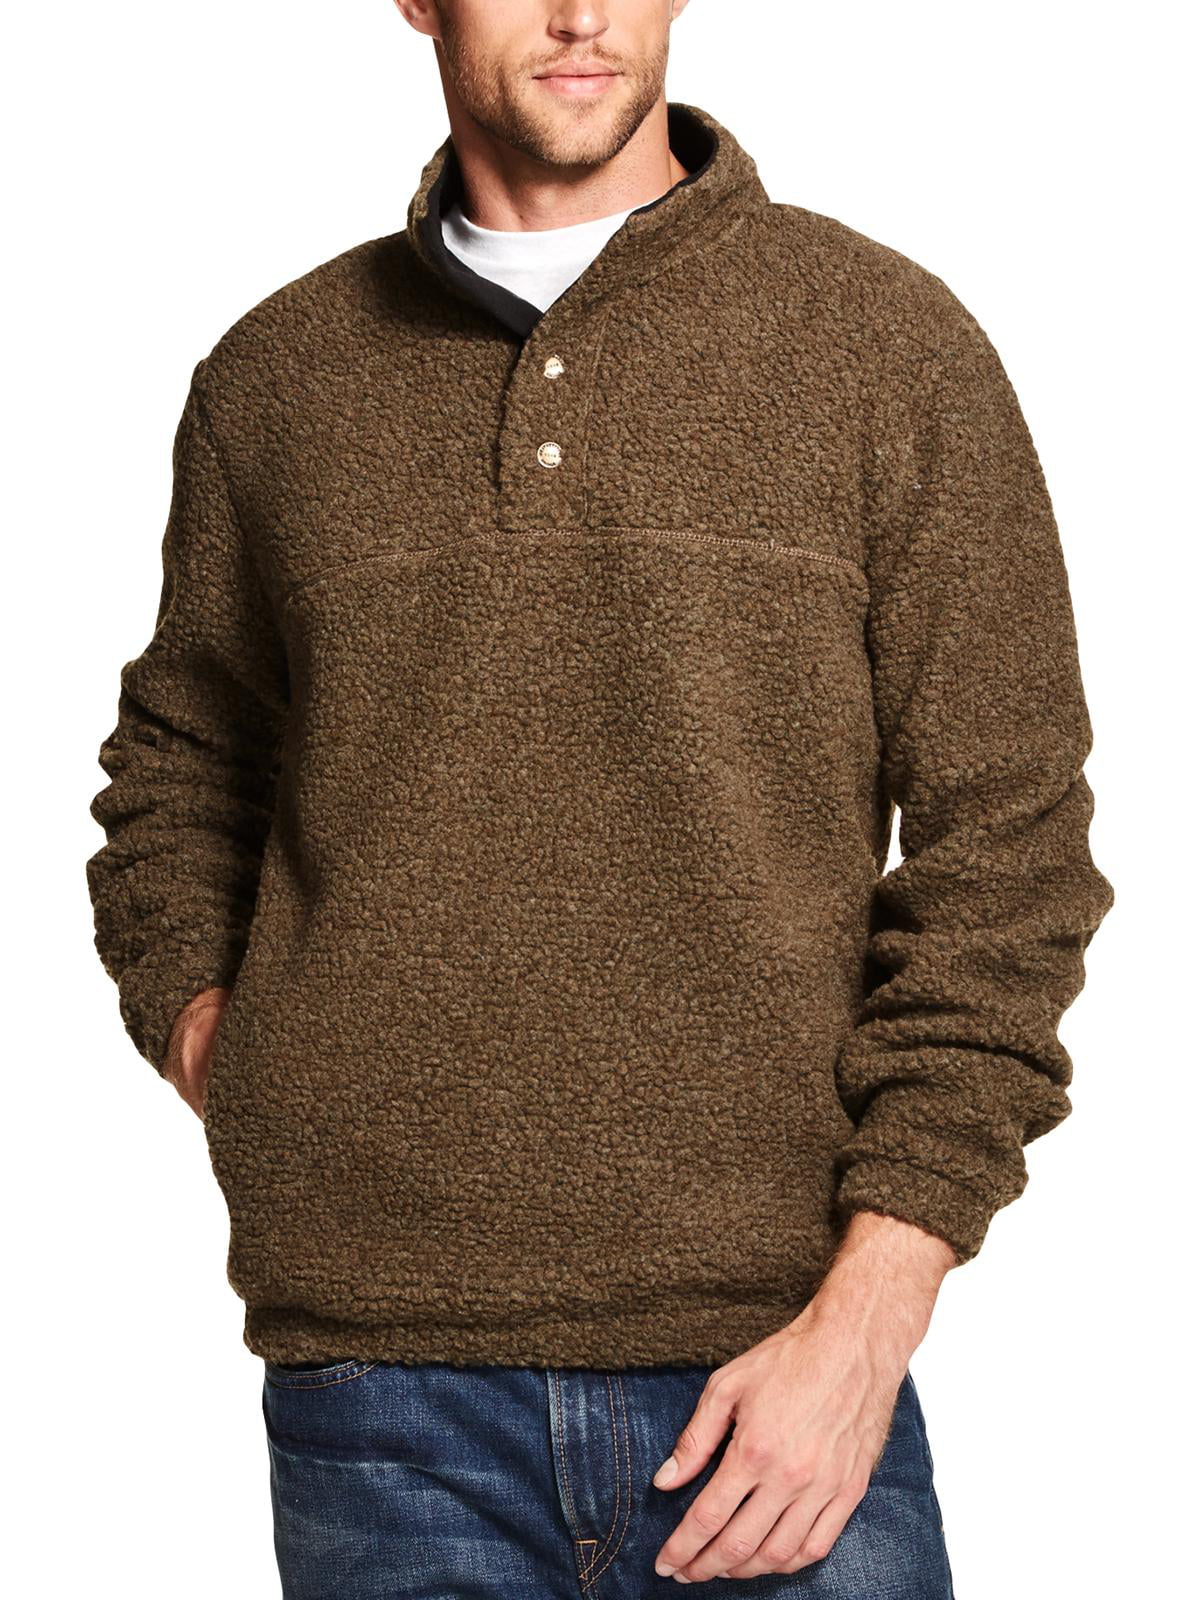 Weatherproof Vintage Men's Button Down Fleece Lined Warm Sweater Shirt Jacket 